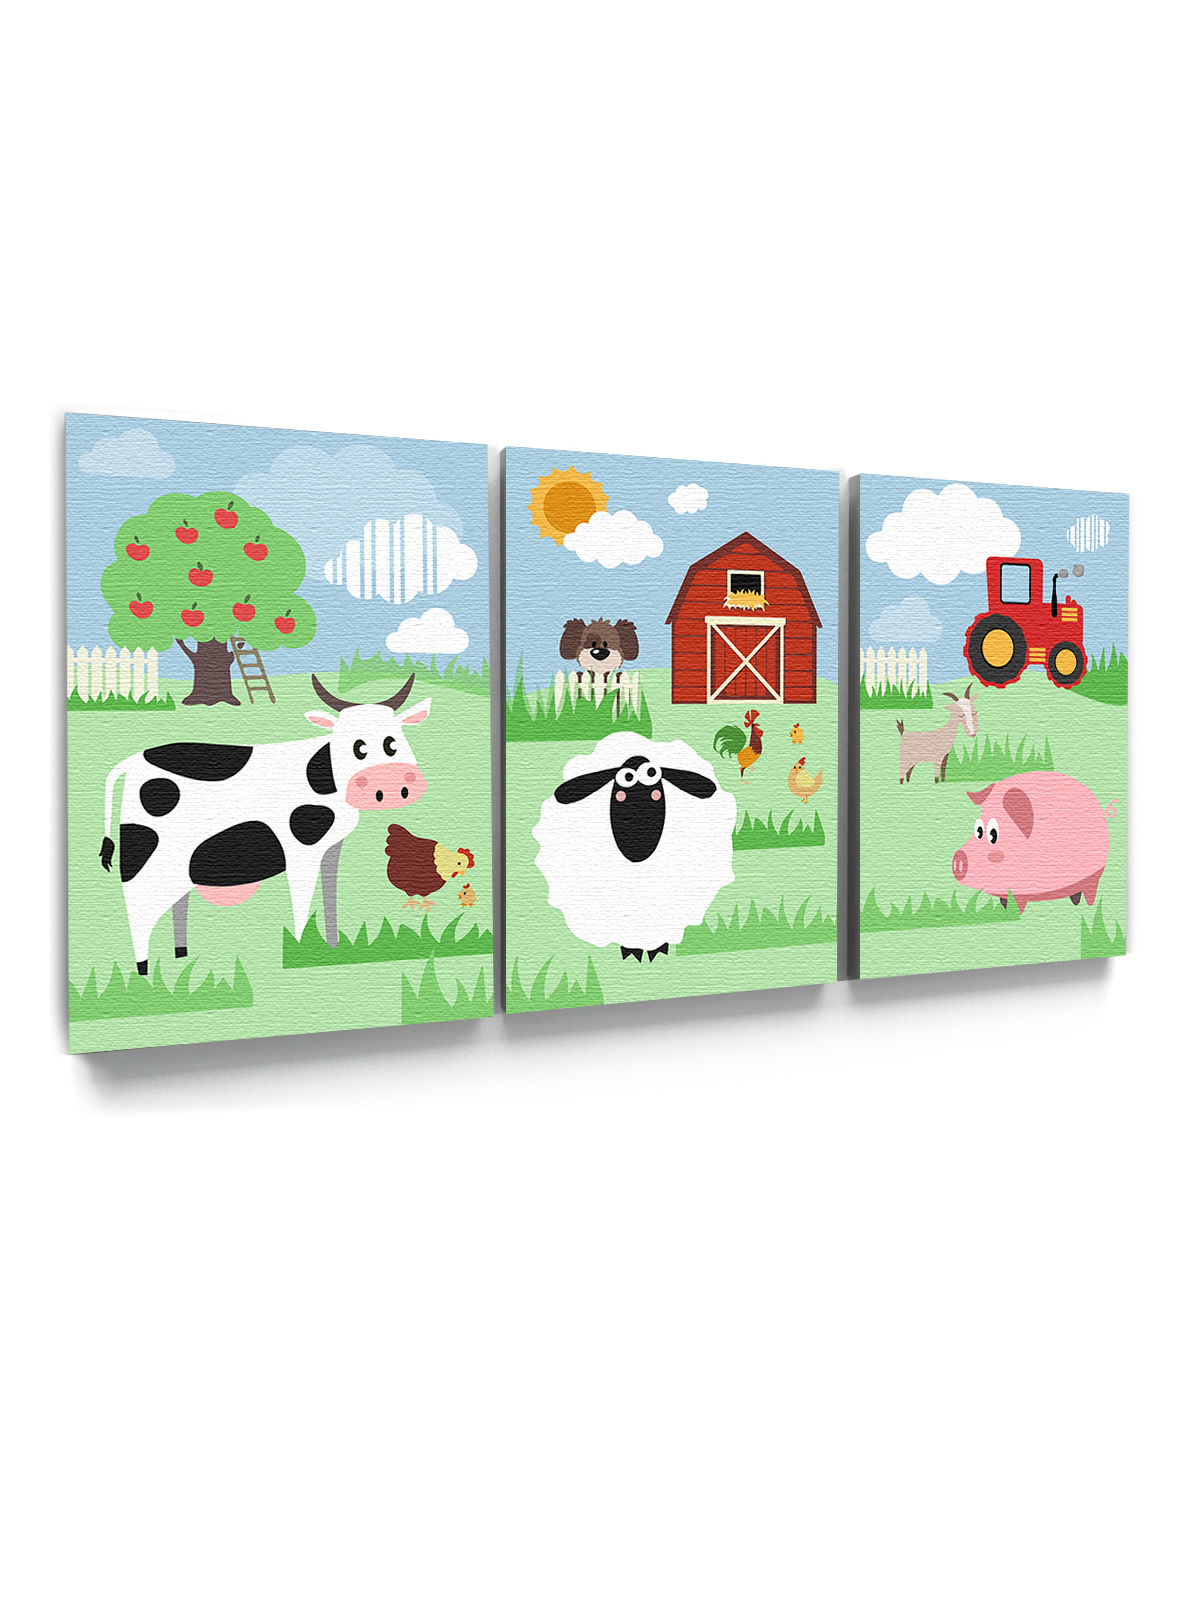 Cute Baby Animal Farm Wallpapers